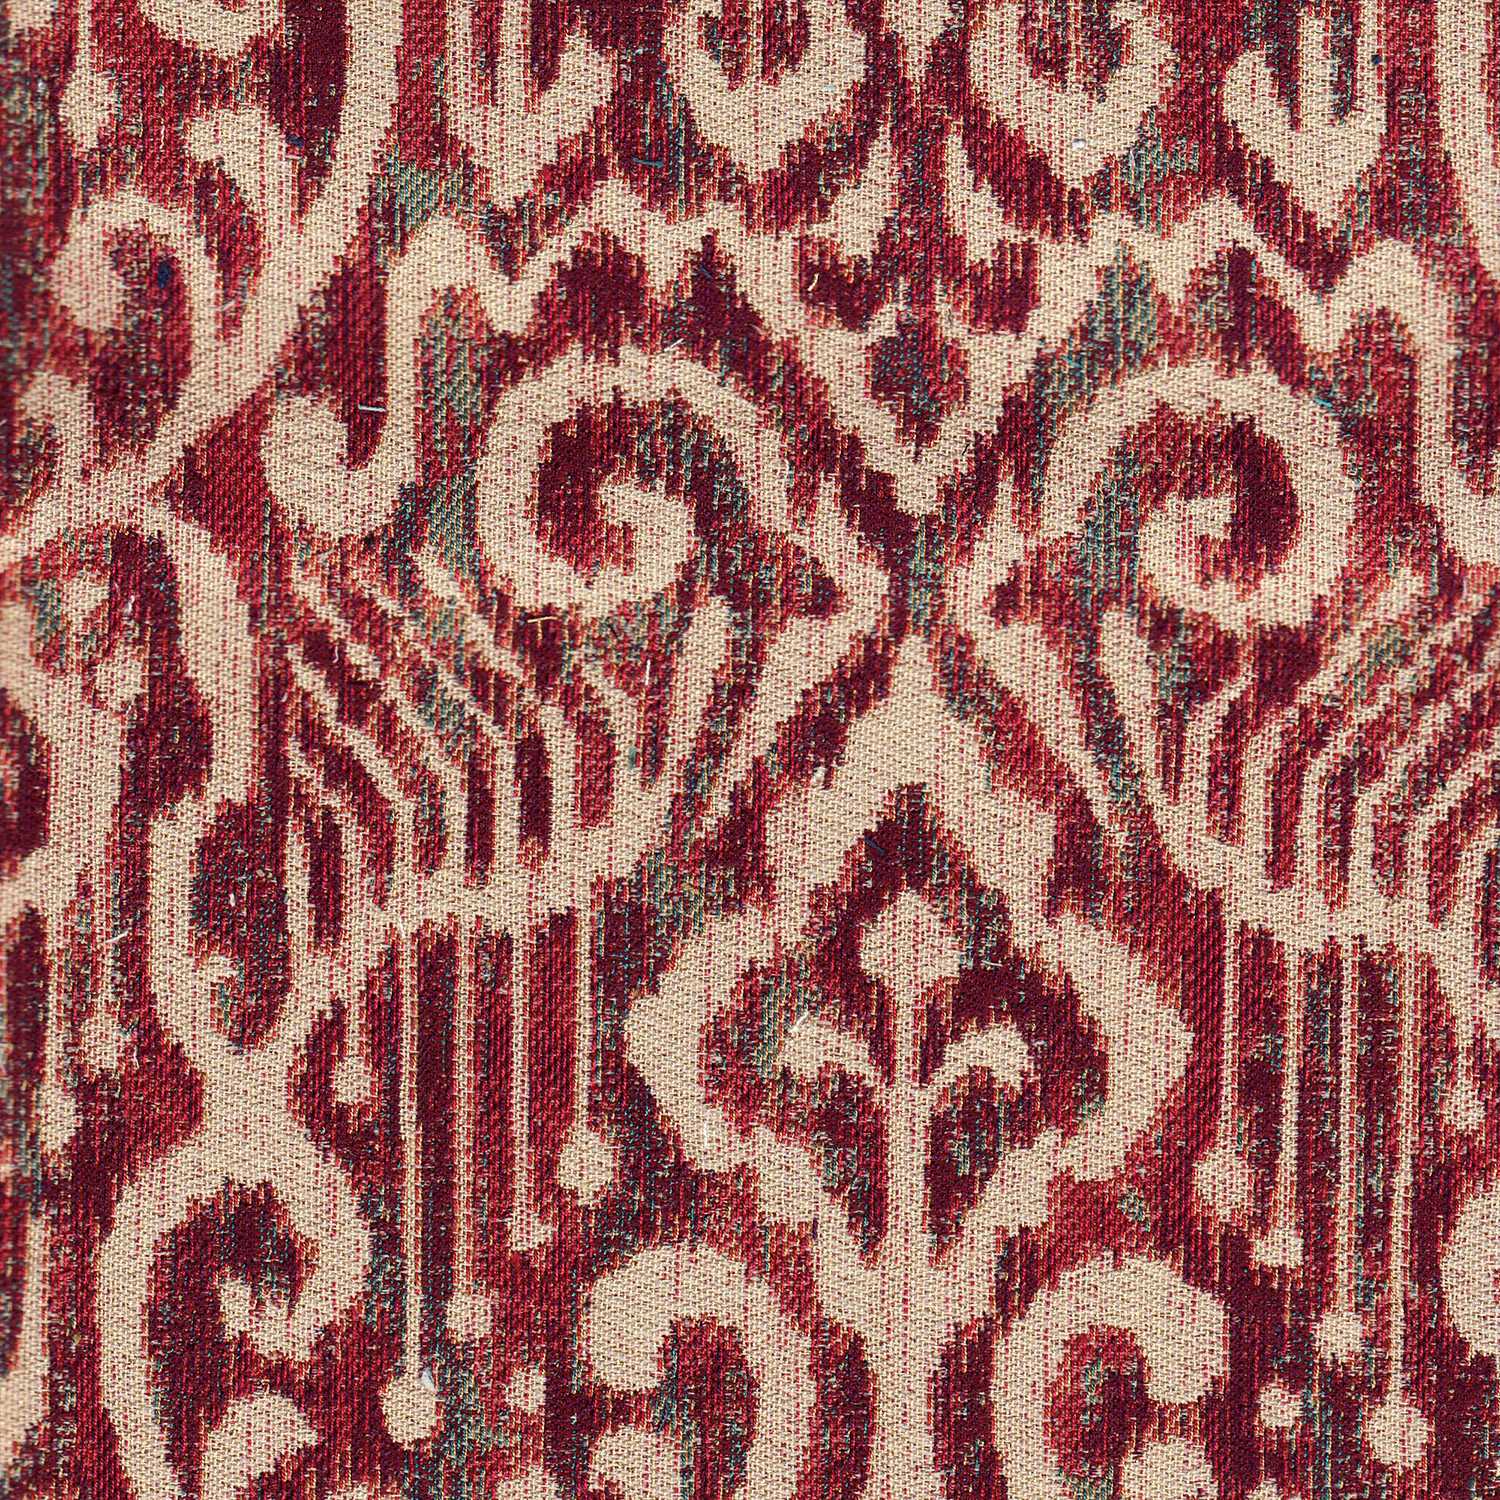 G-MARIS/RED - Multi Purpose Fabric Suitable For Drapery